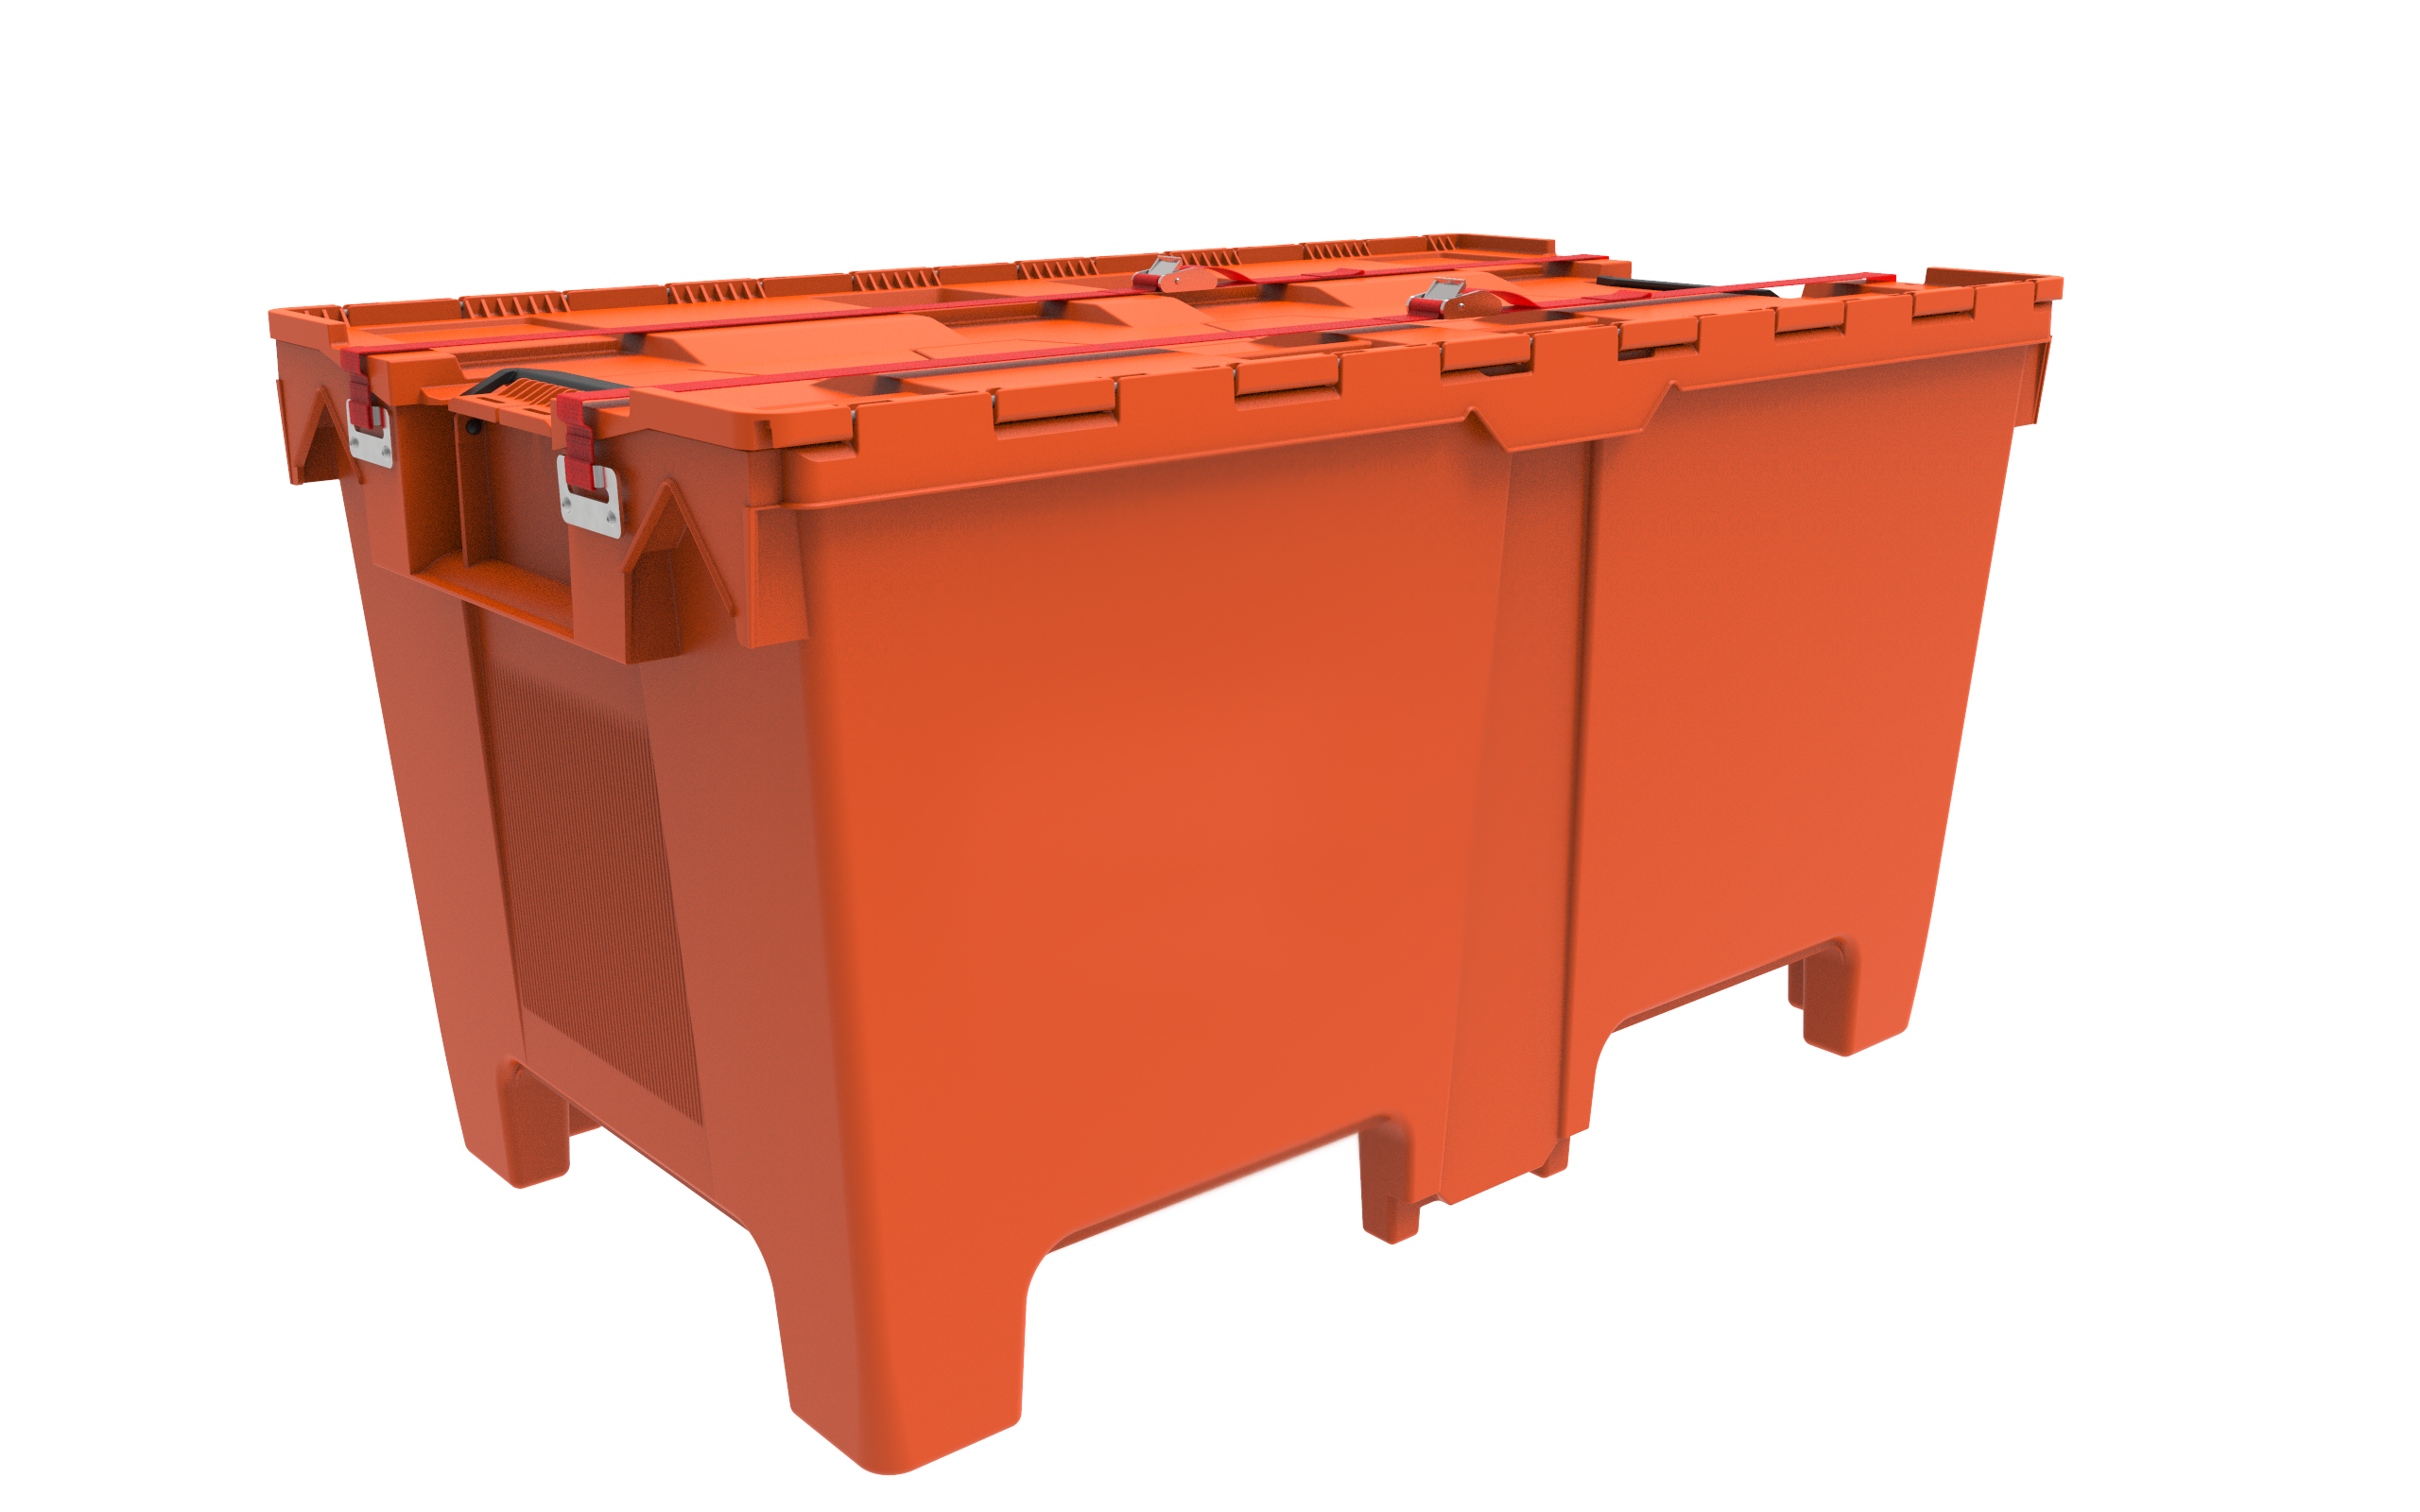 39 x 23 x 21 – Half Pallet Container UN Certified